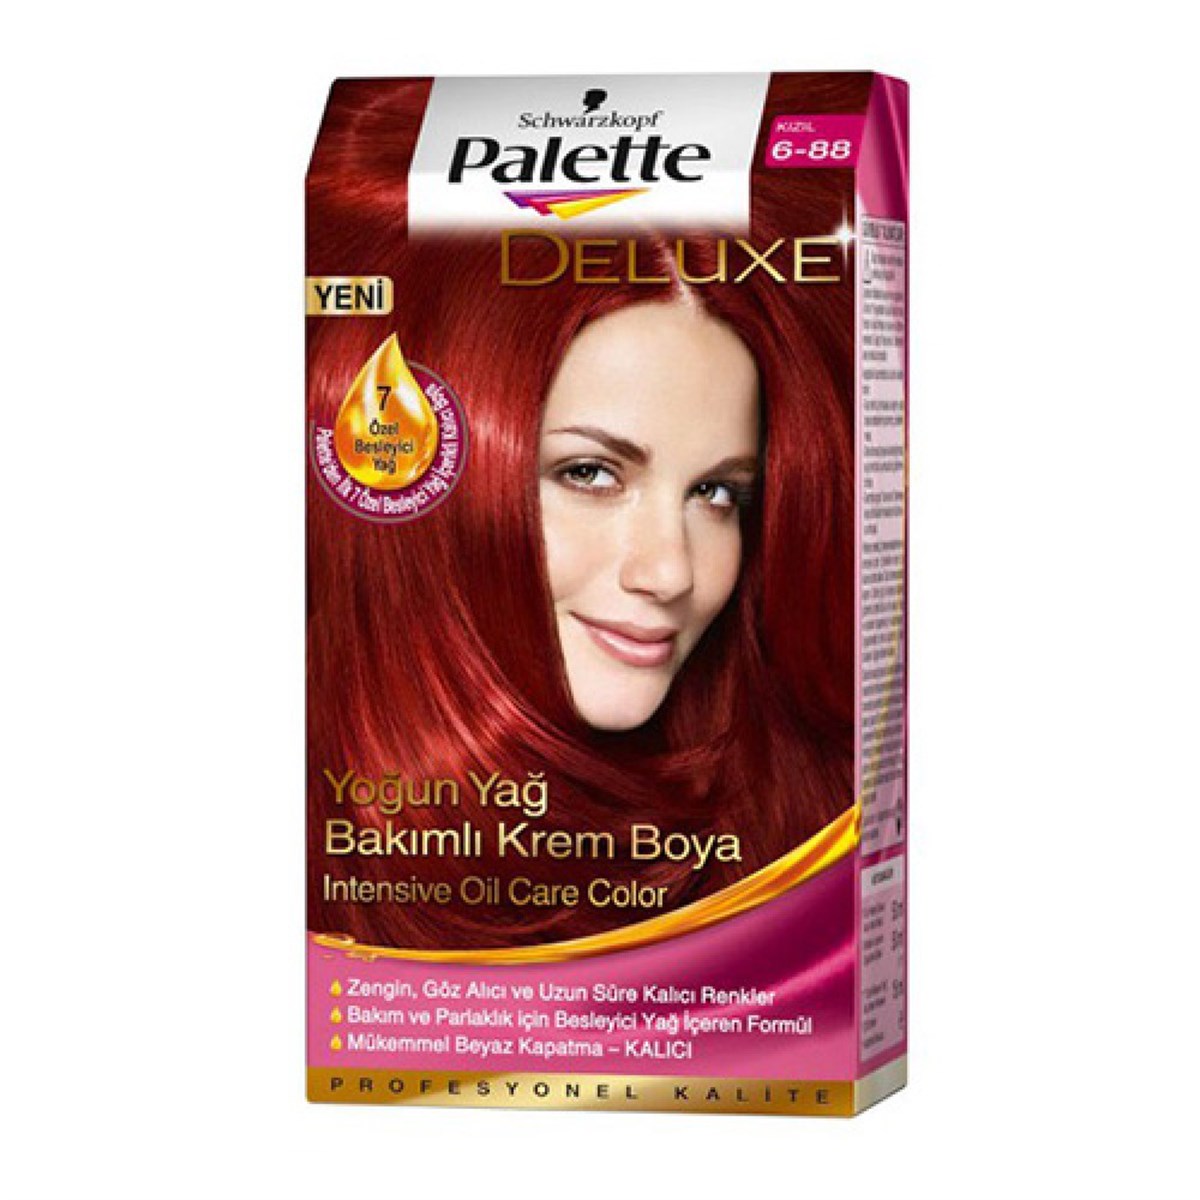 Palette Deluxe Set Saç Boyası 6.88 Kızıl | Cossta Cosmetic Station